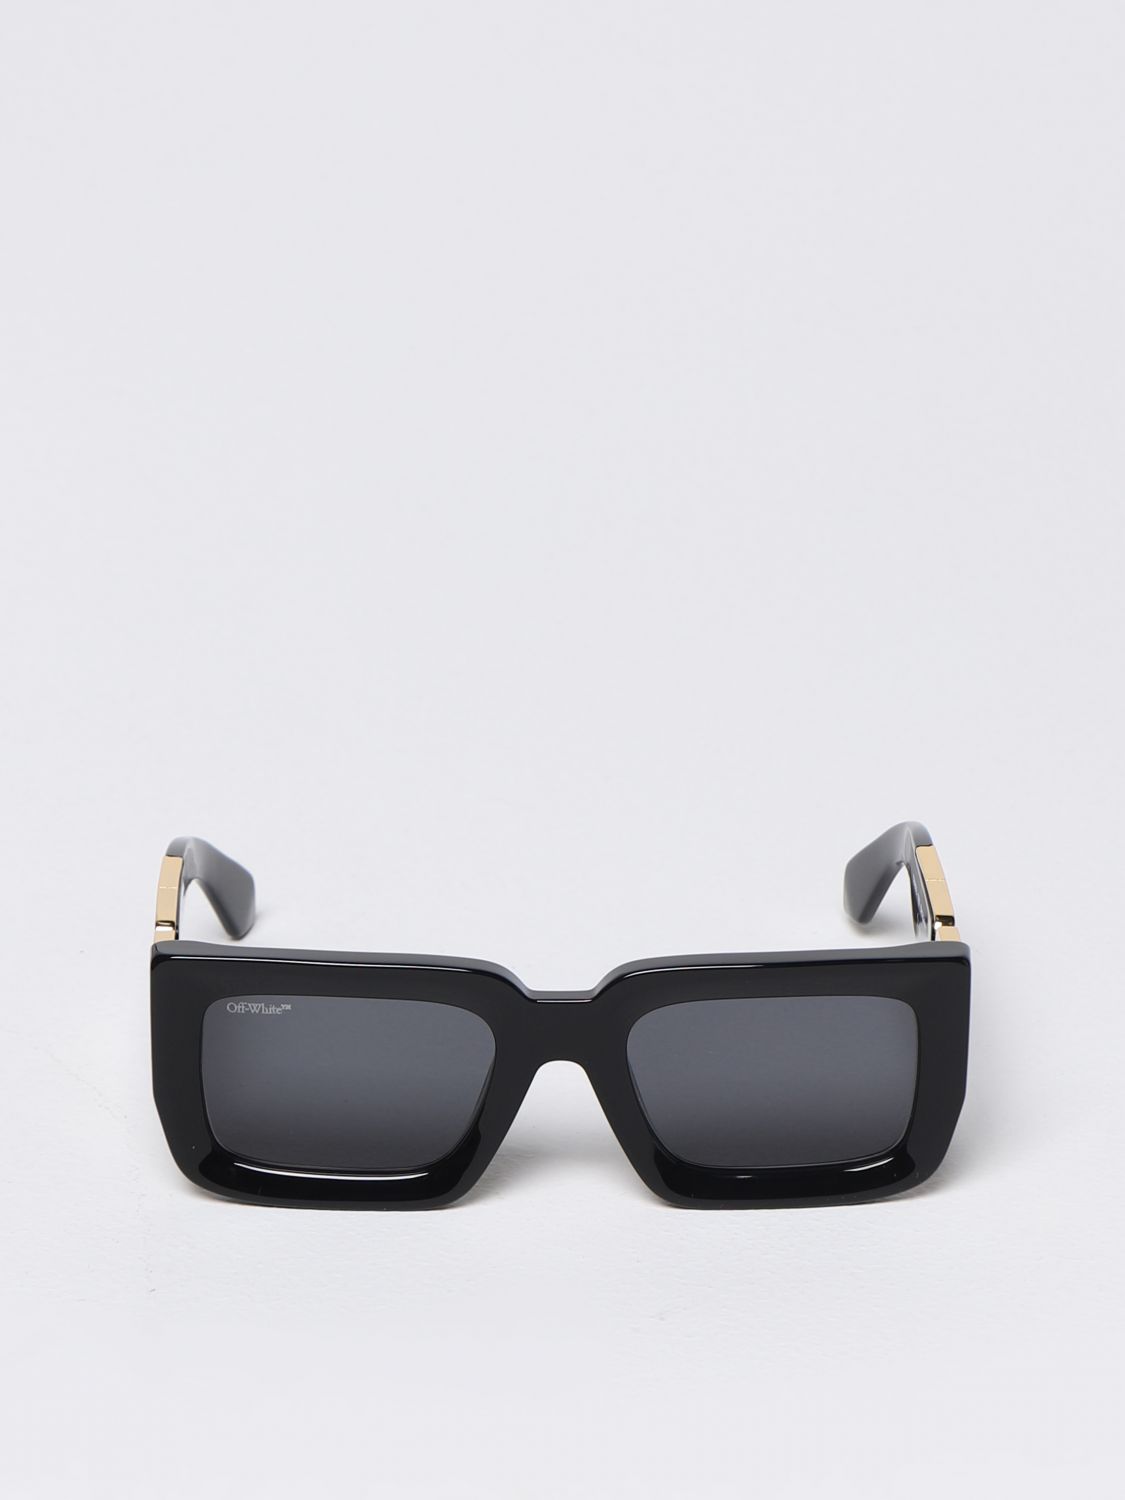 Off-White Dark Grey Marble Boston Sunglasses - Men from